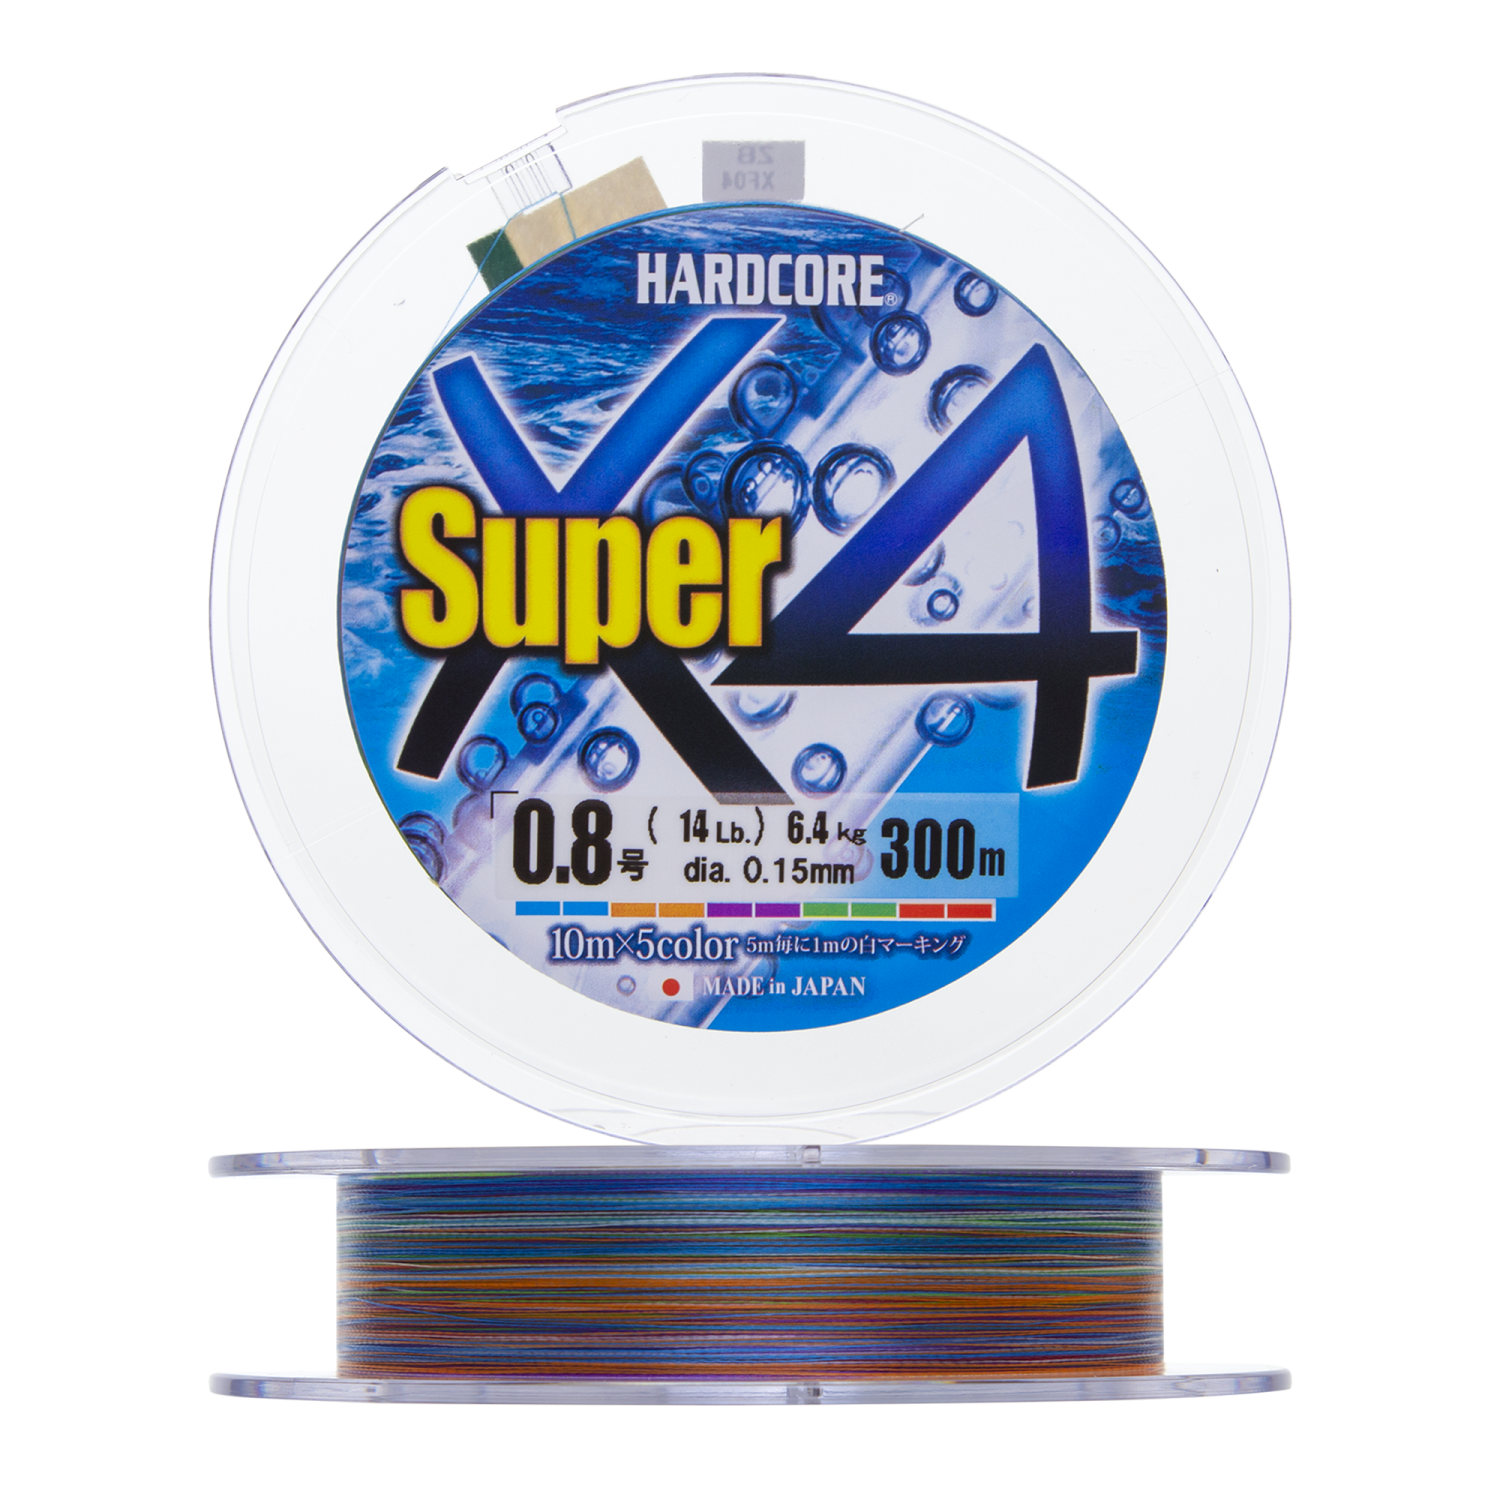 цена Шнур плетеный Duel Hardcore PE X4 Super #0,8 0,15мм 300м (5color)